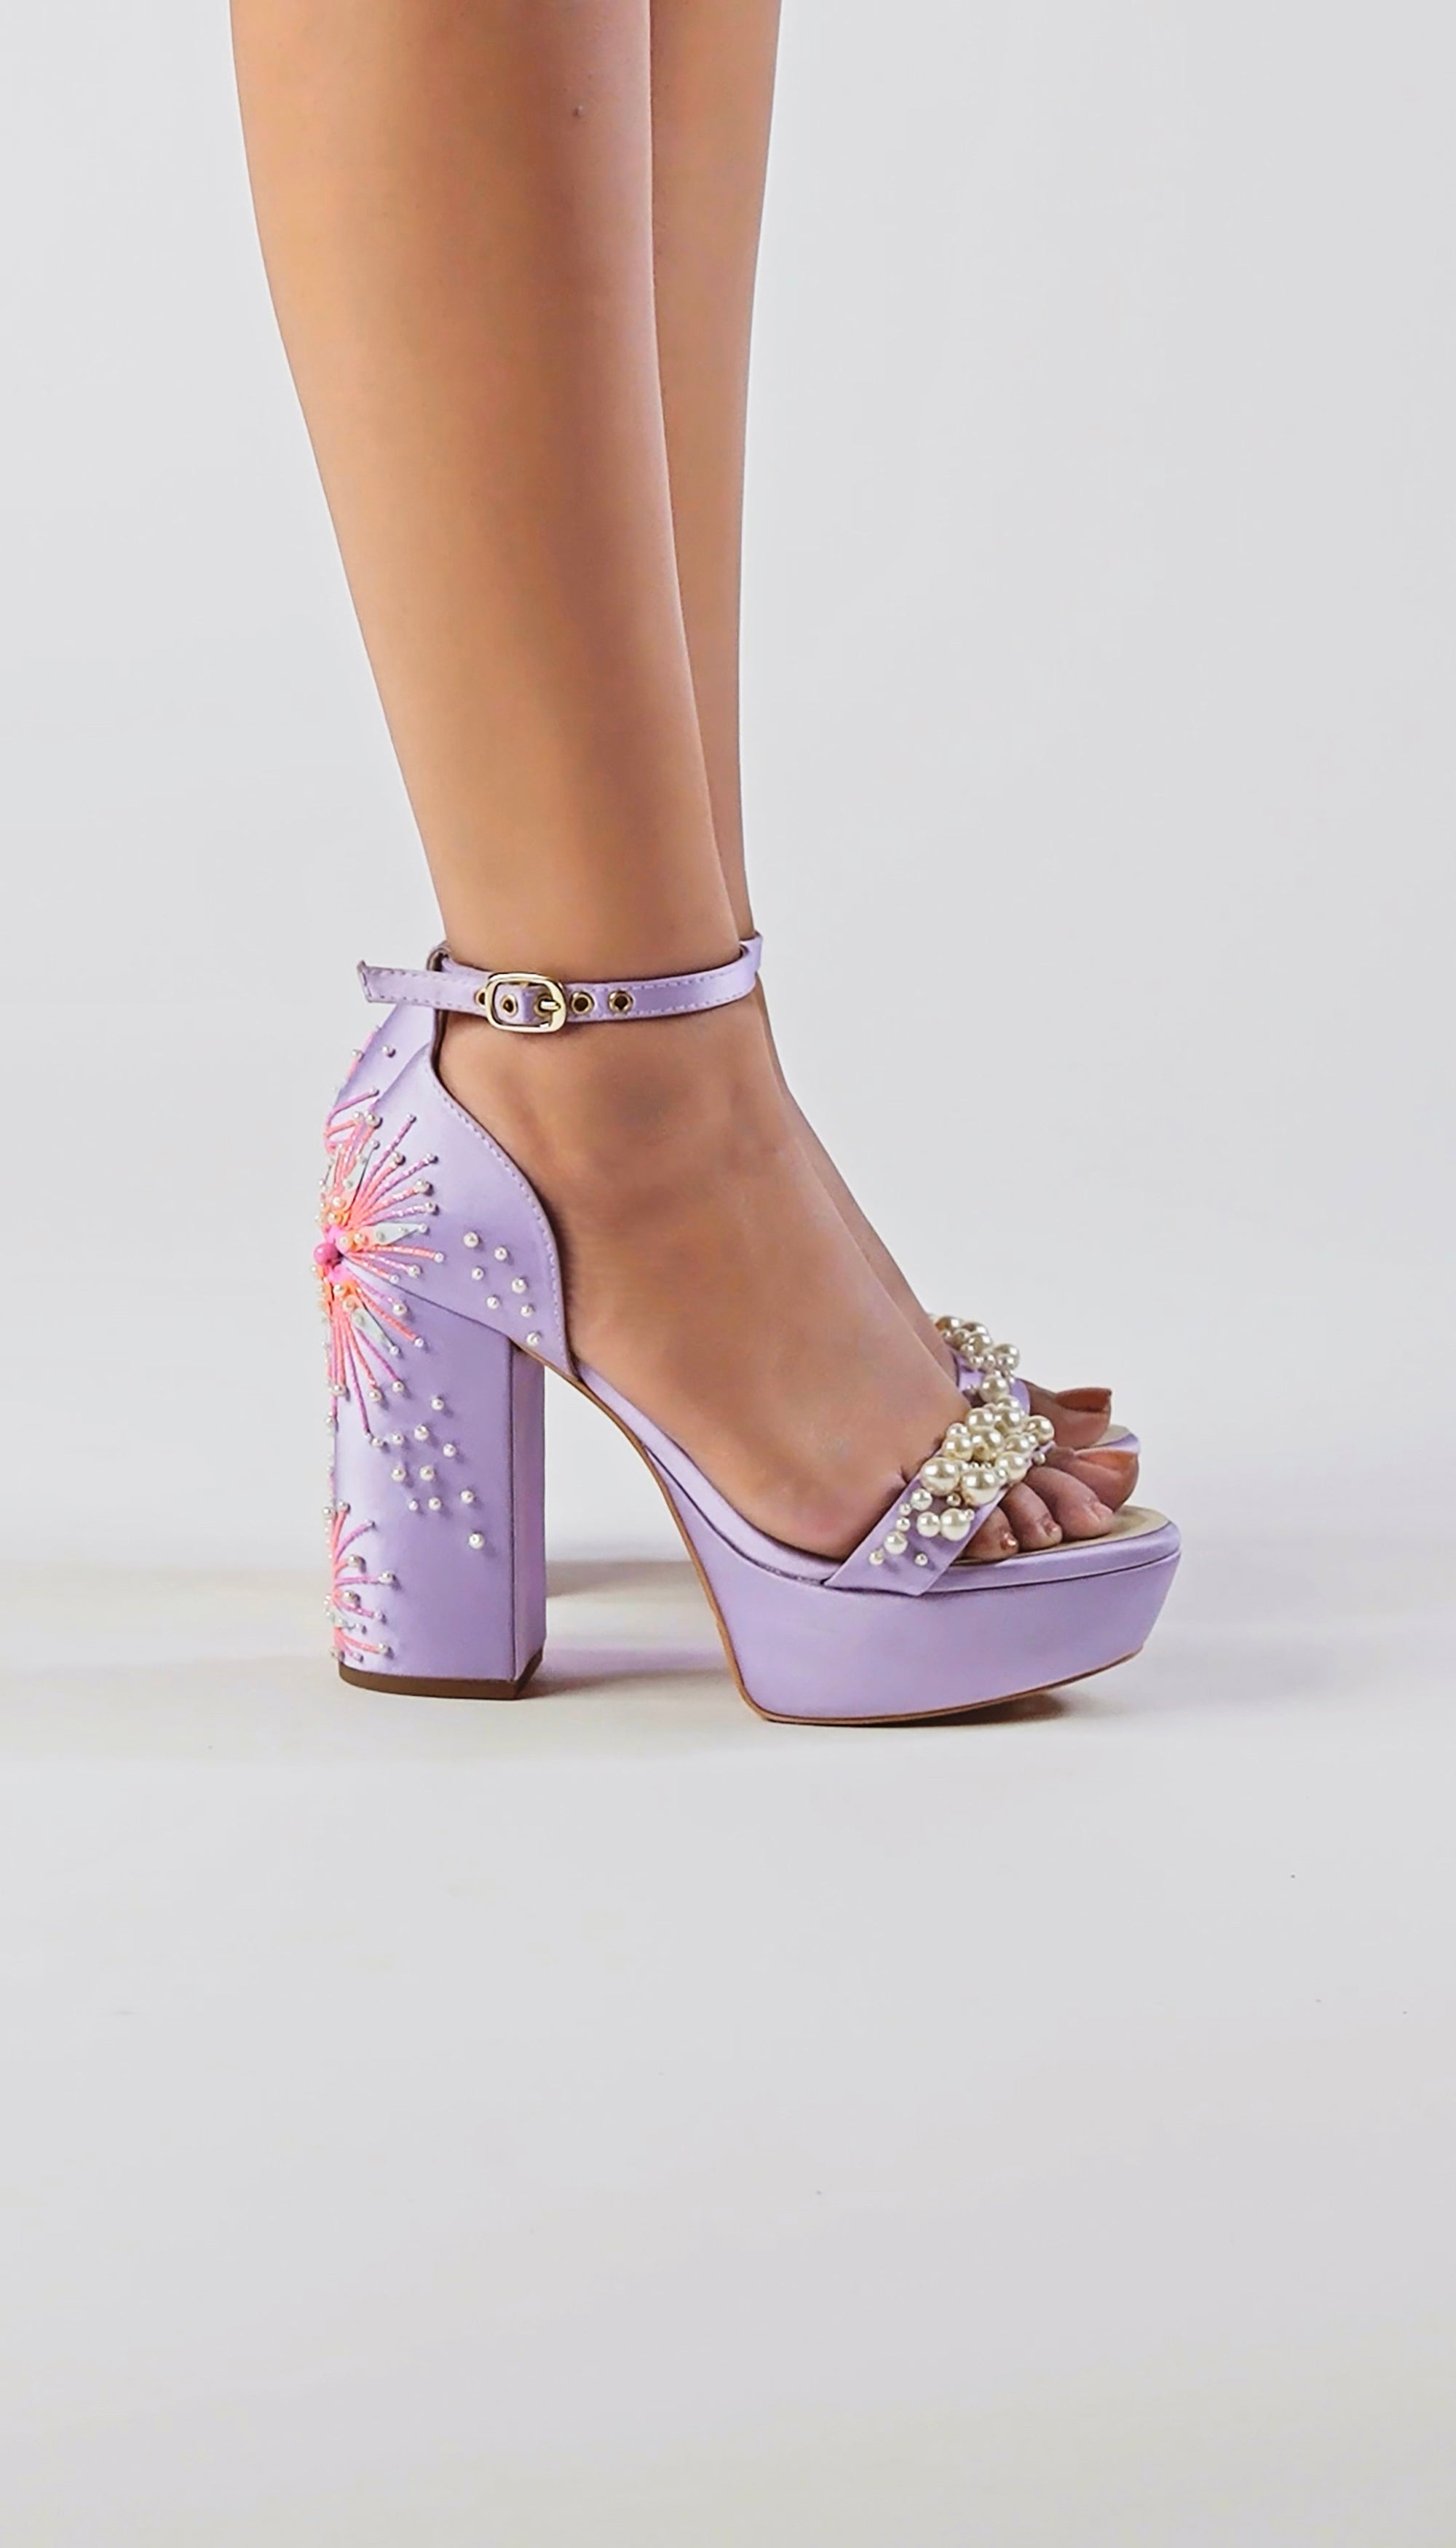 Fancy Bridal Shoes Design - bridal sandals high heels / low heels - wedding  bridal shoes - YouTube